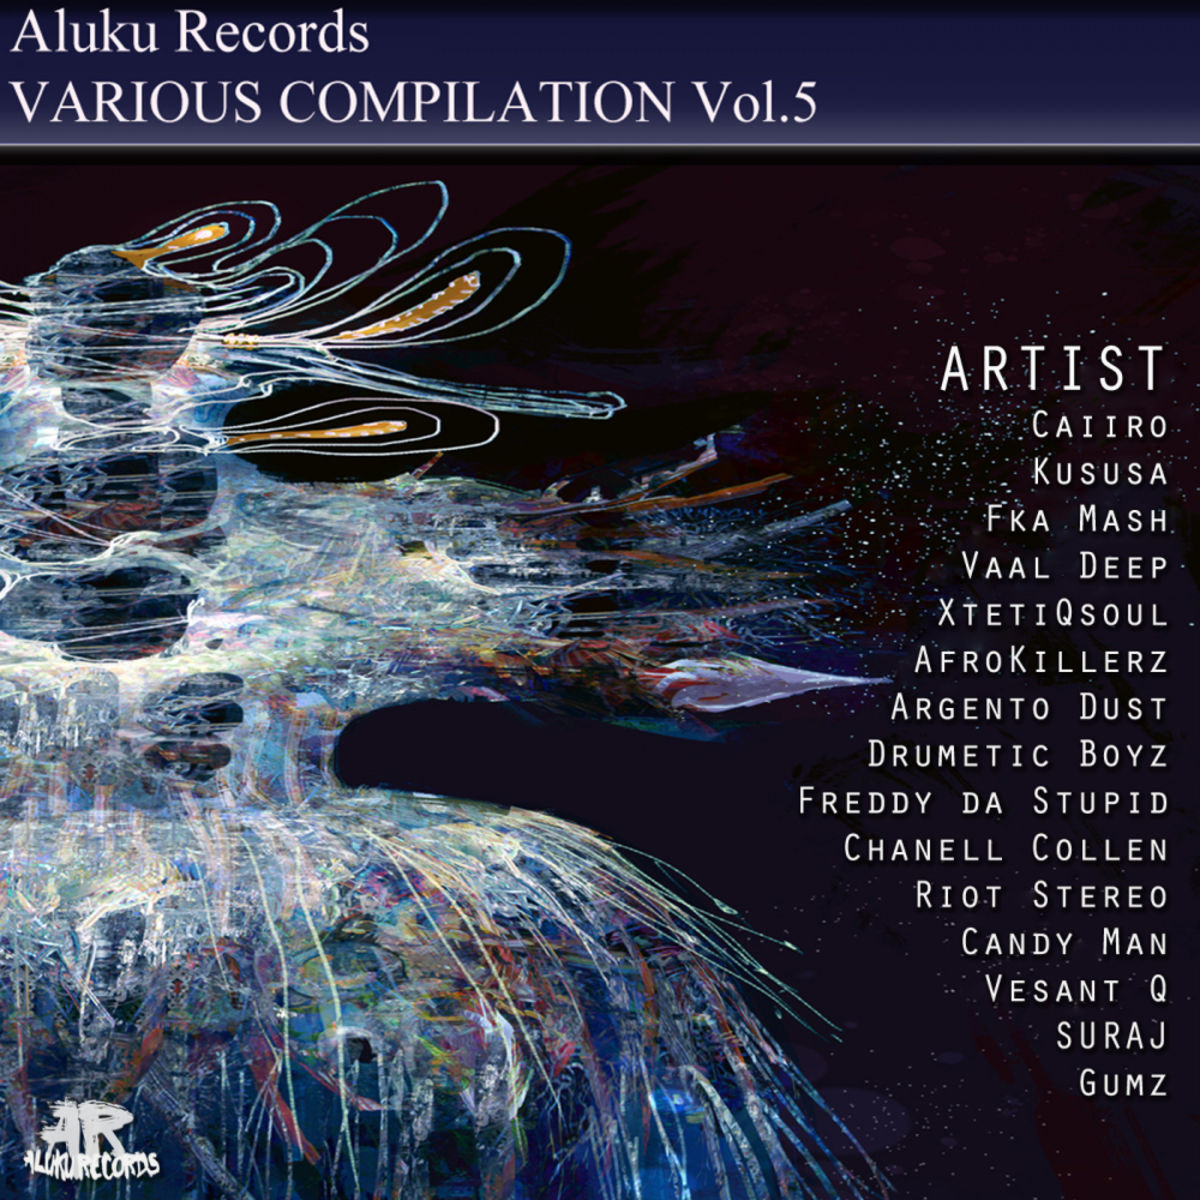 VA - Aluku Records Various Compilation, Vol. 5 / Aluku Records